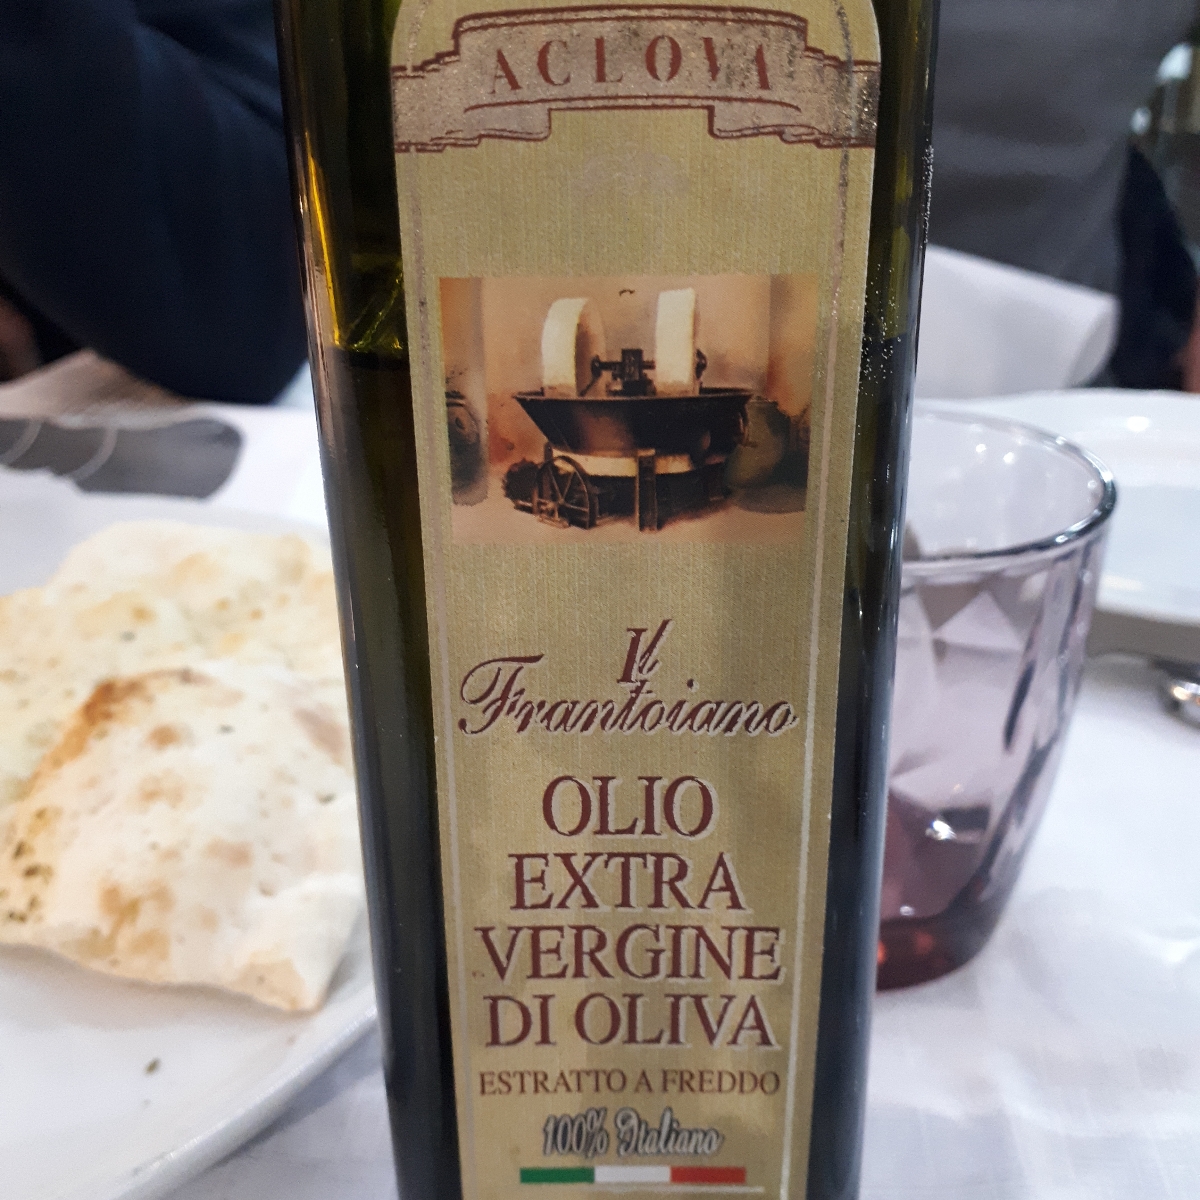 Aclova Olio Extravergine di oliva Review | abillion